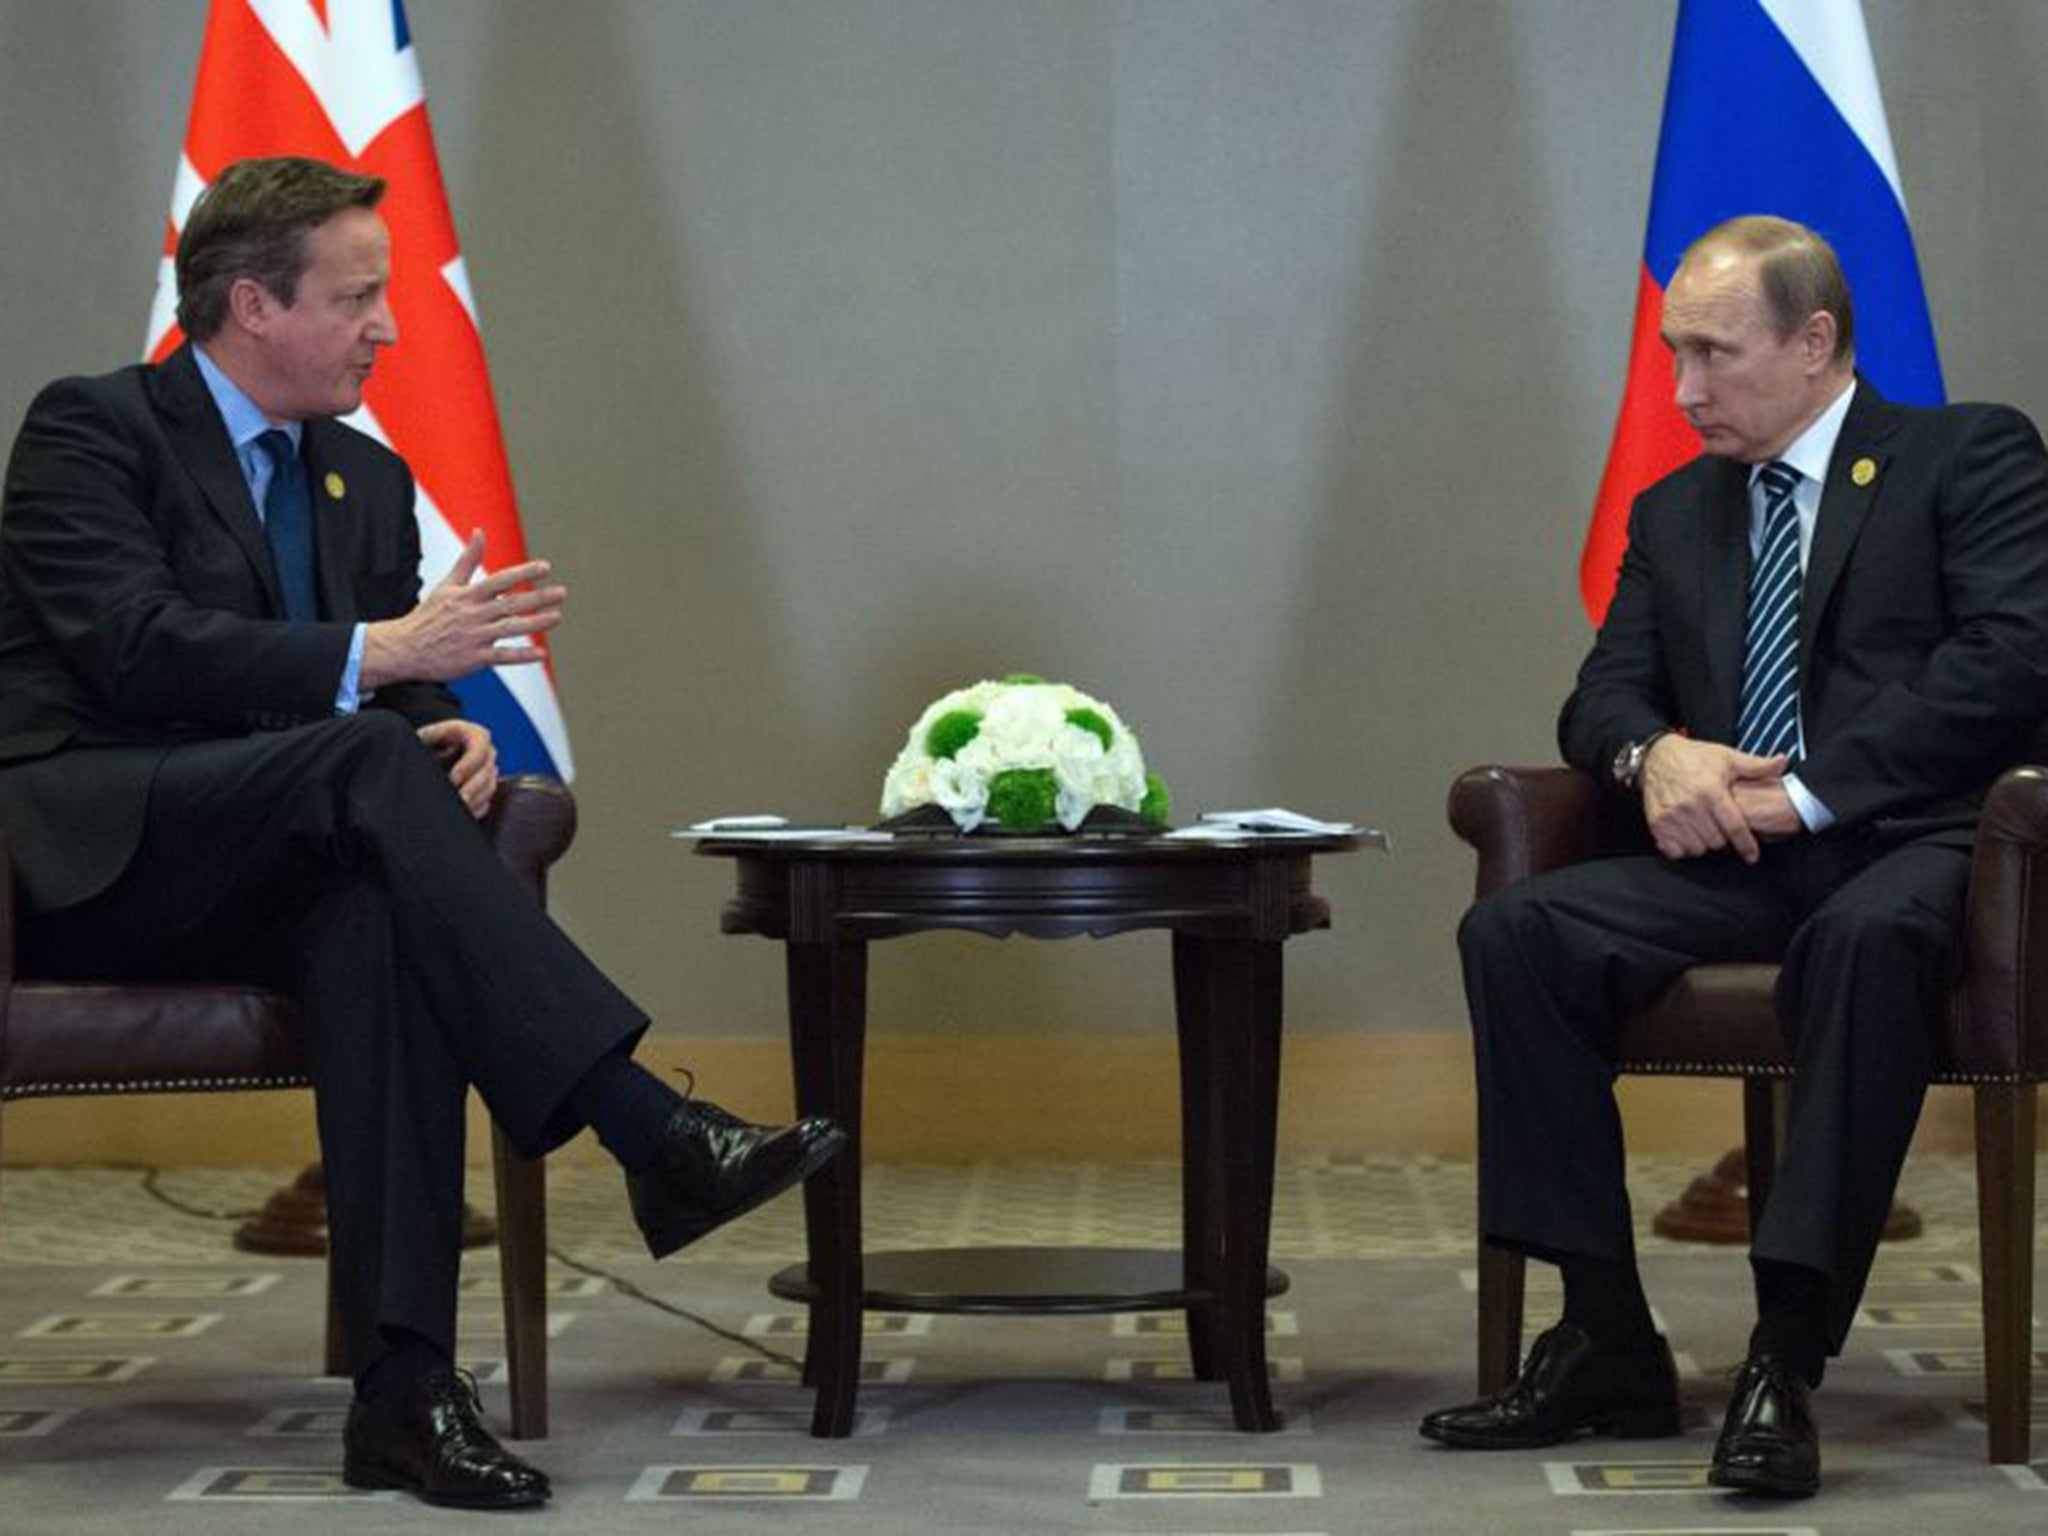 David Cameron with Vladimir Putin at the G20 summit in Turkey on Monday